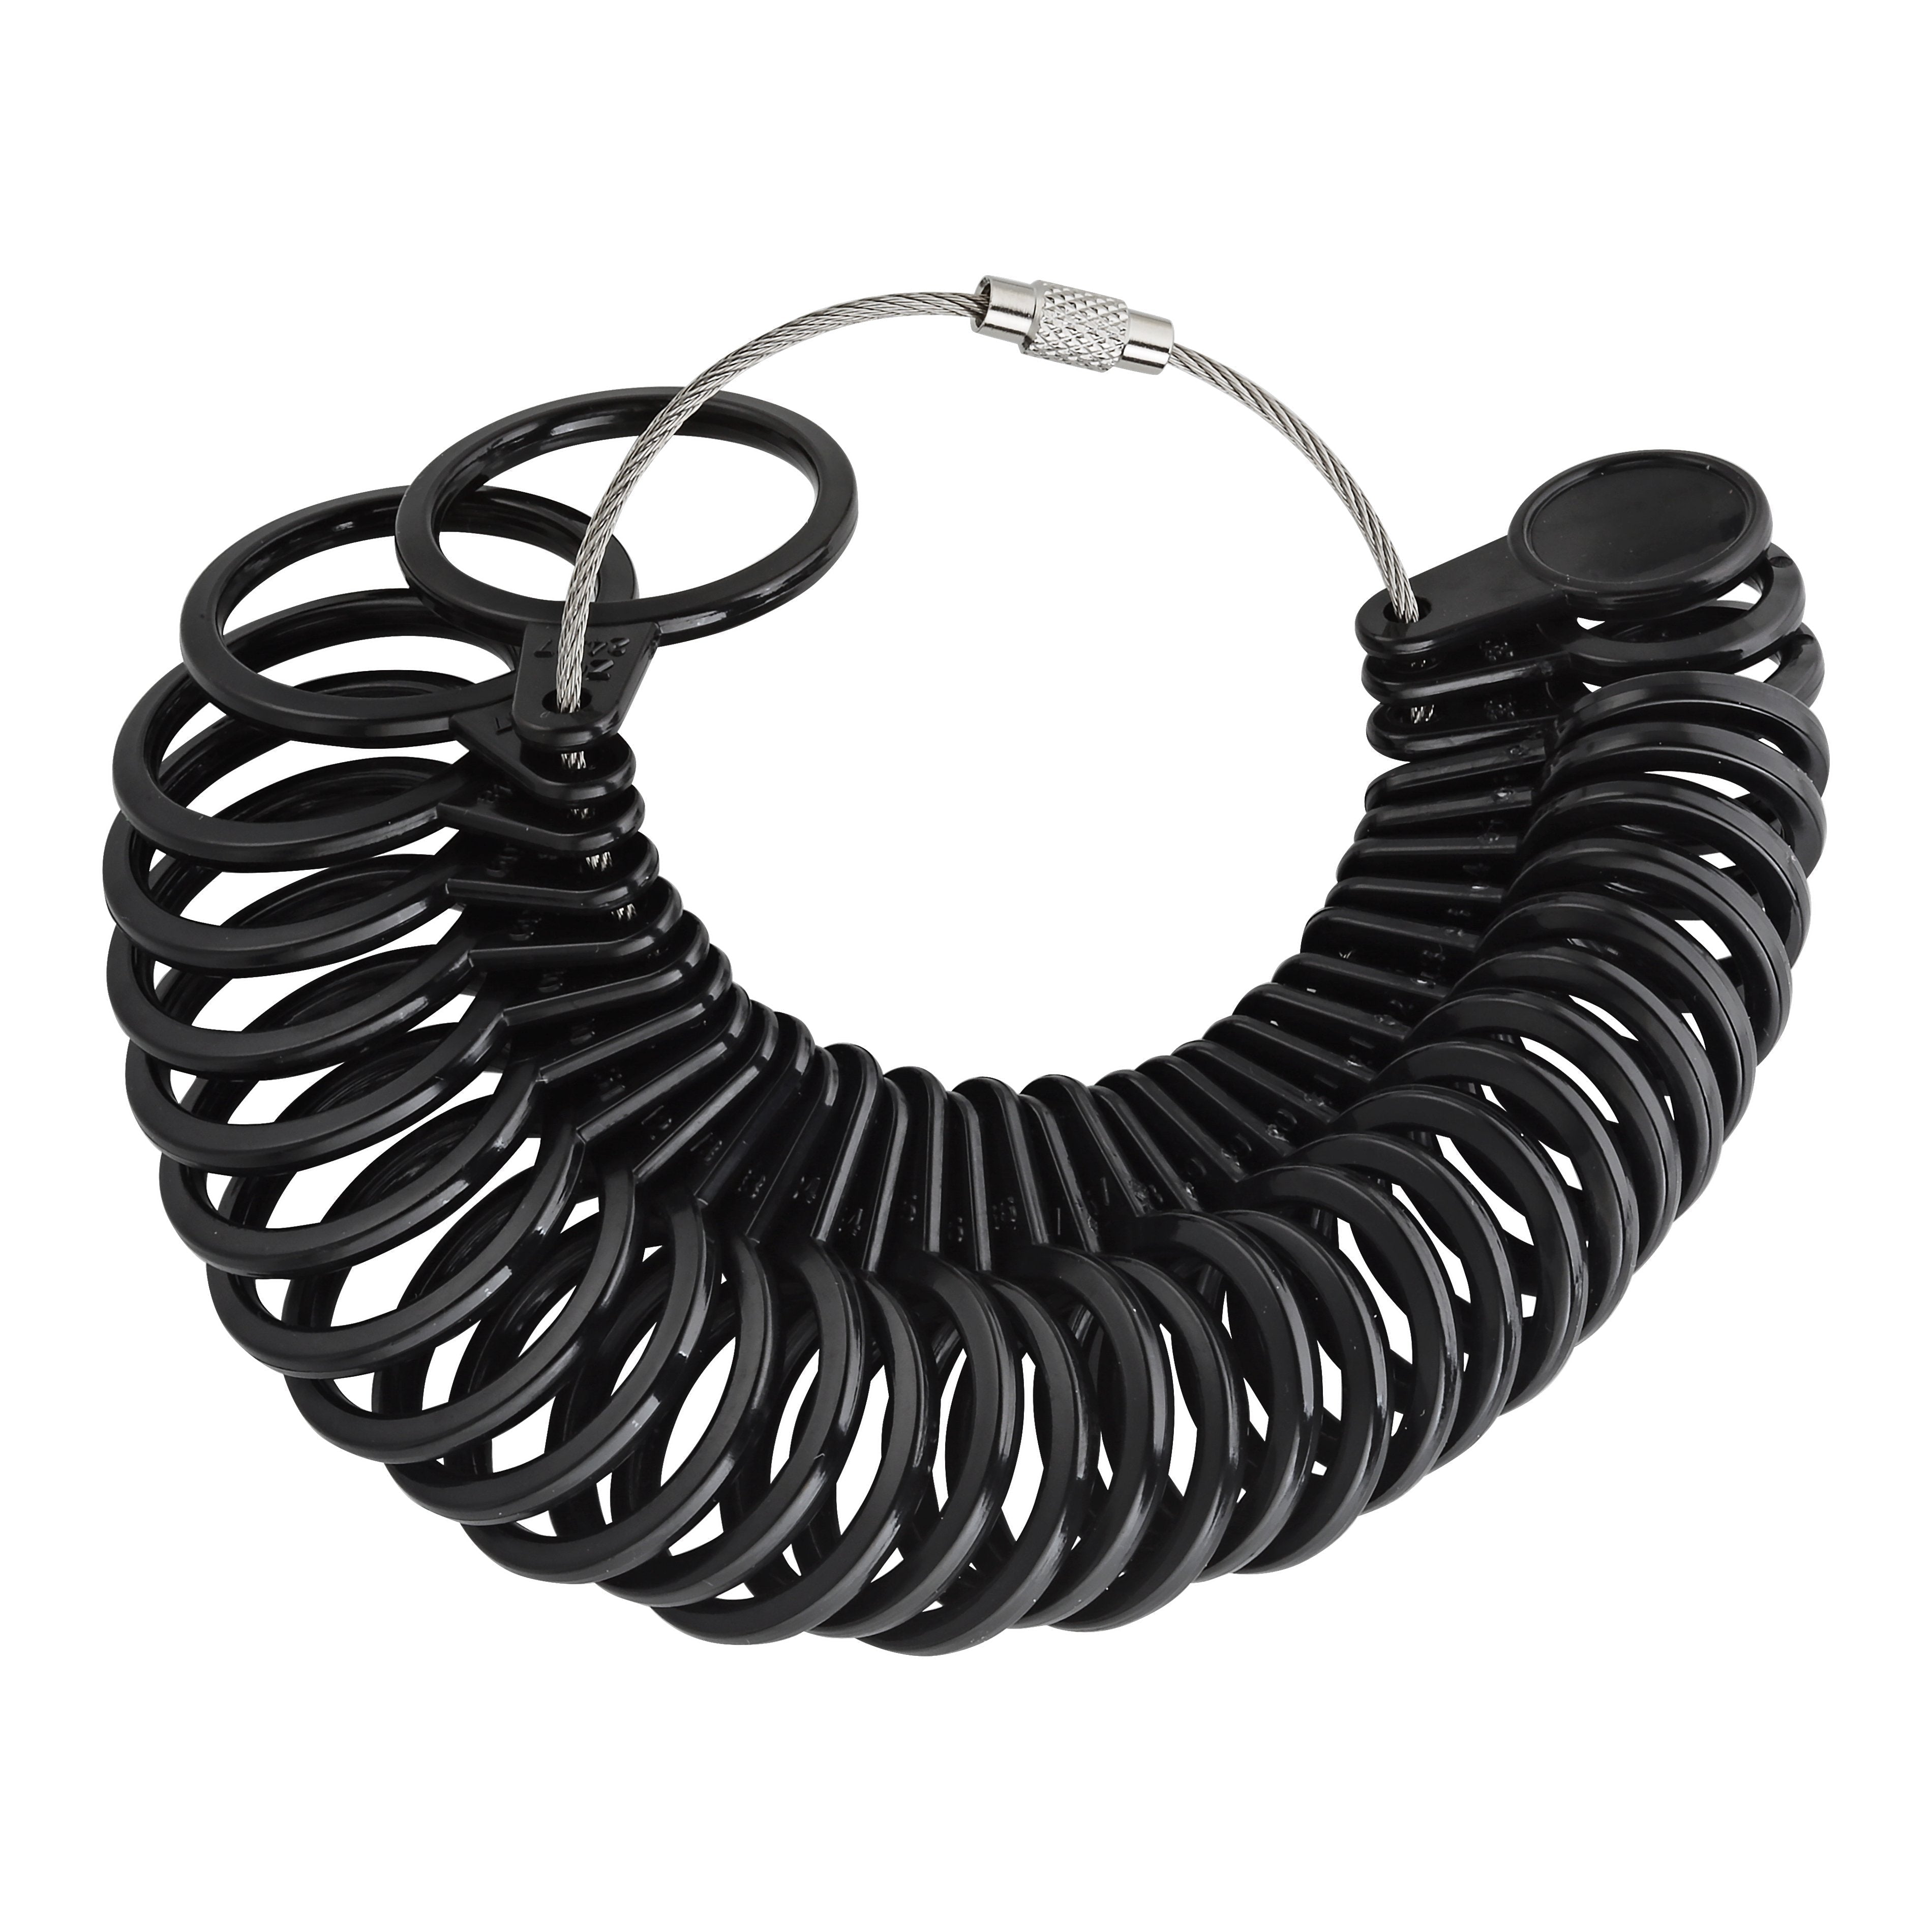 Ring Size Kit – Dear Rae Jewellery International